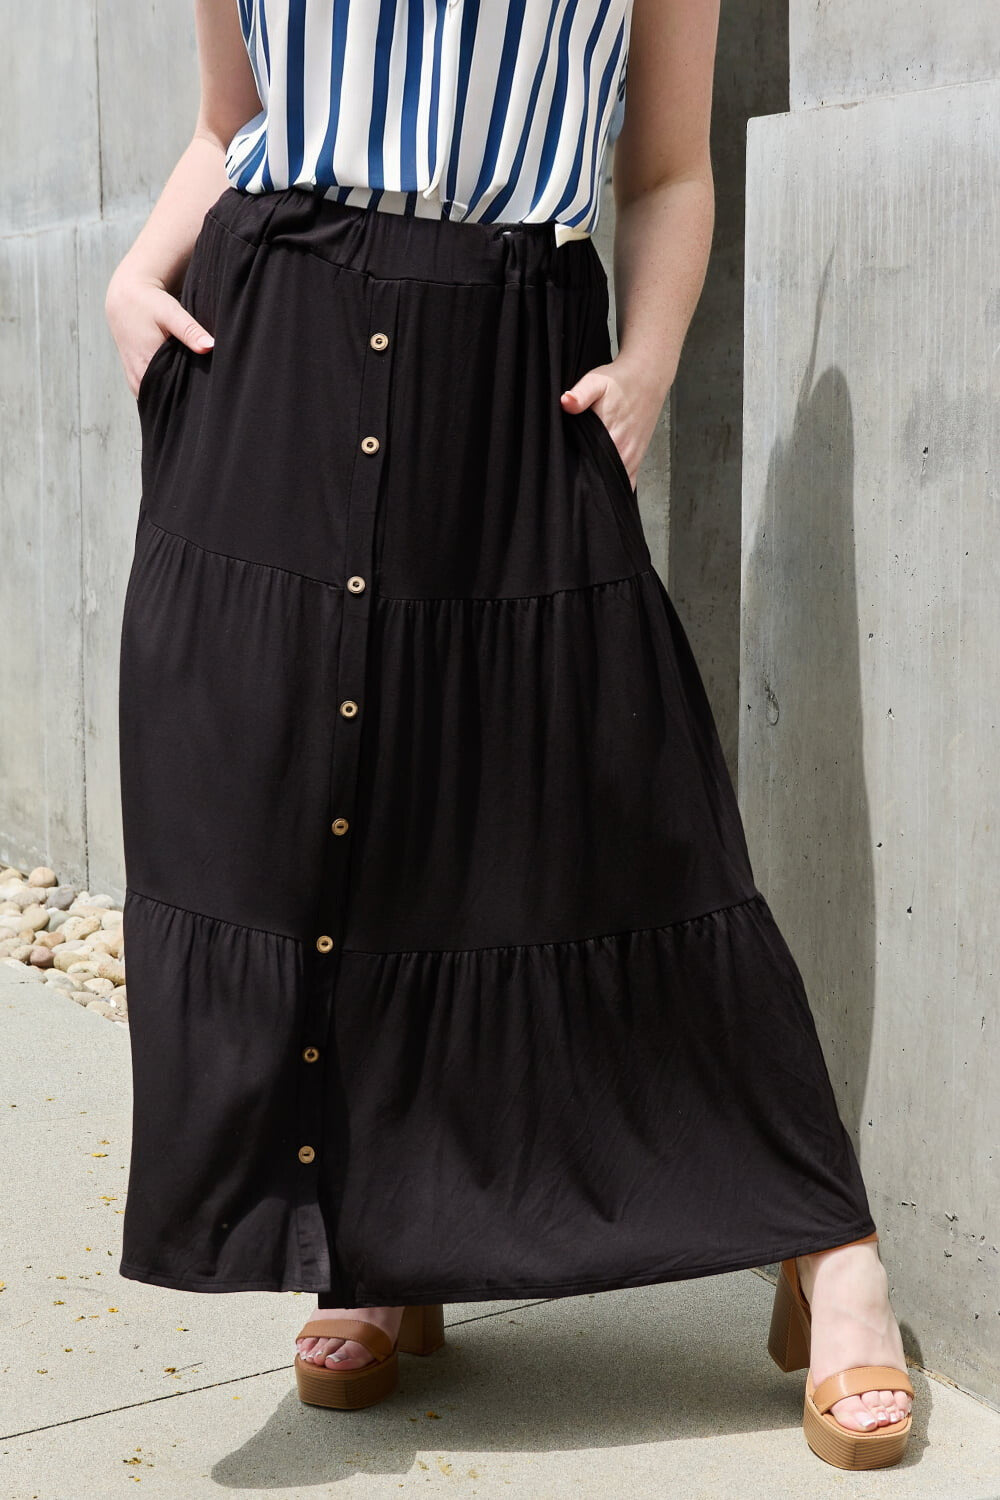 black modest maxi skirt from Nauvoo Supply